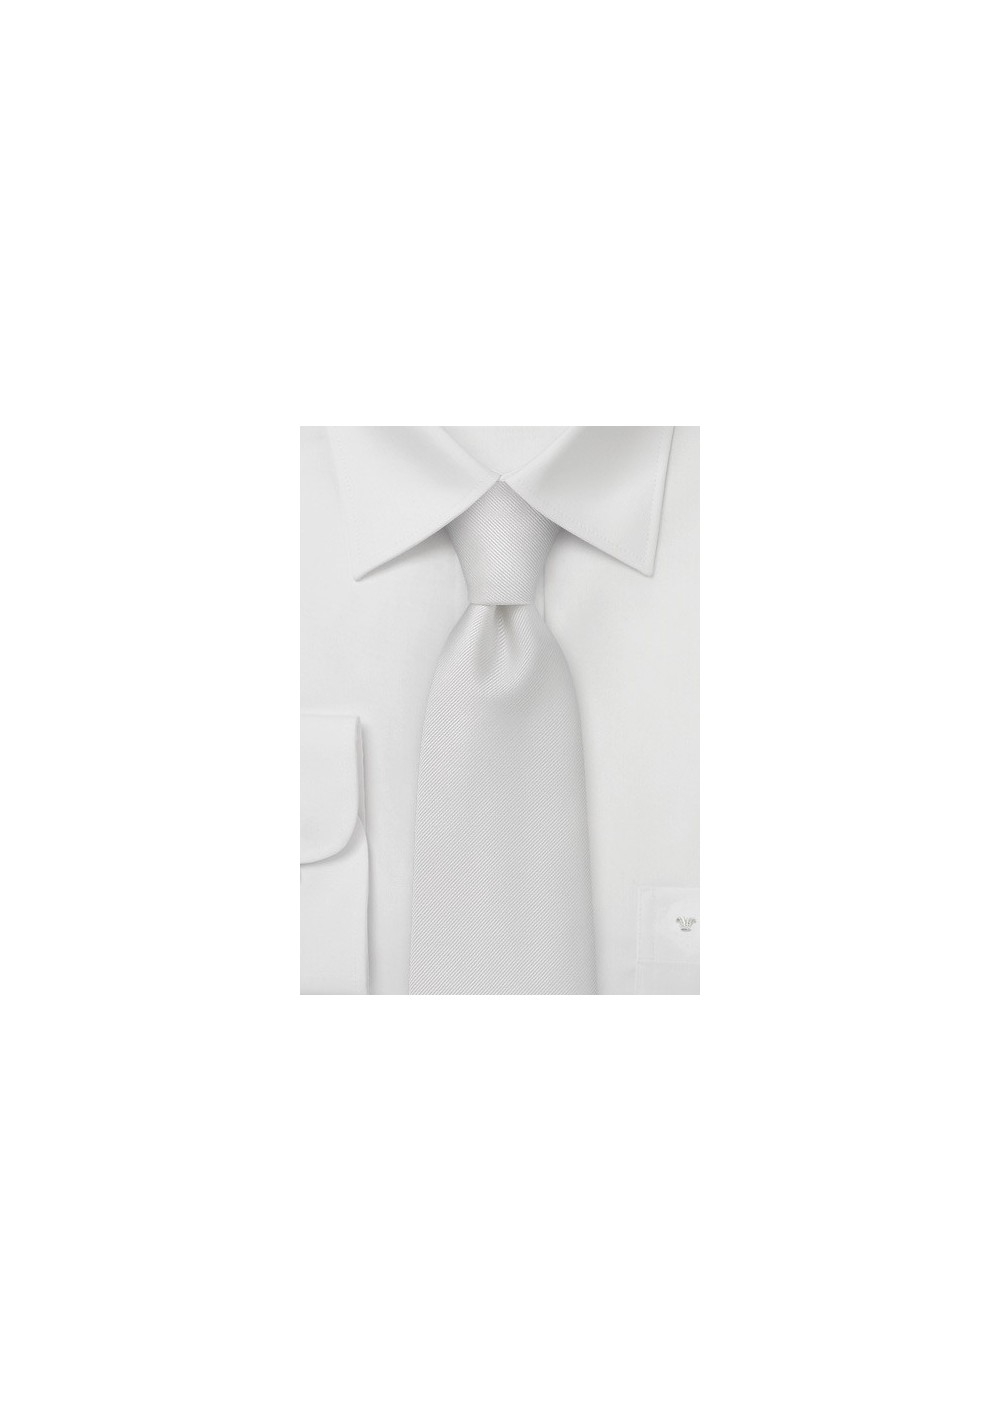 White Mens Ties - Pure White Ribbed Tie